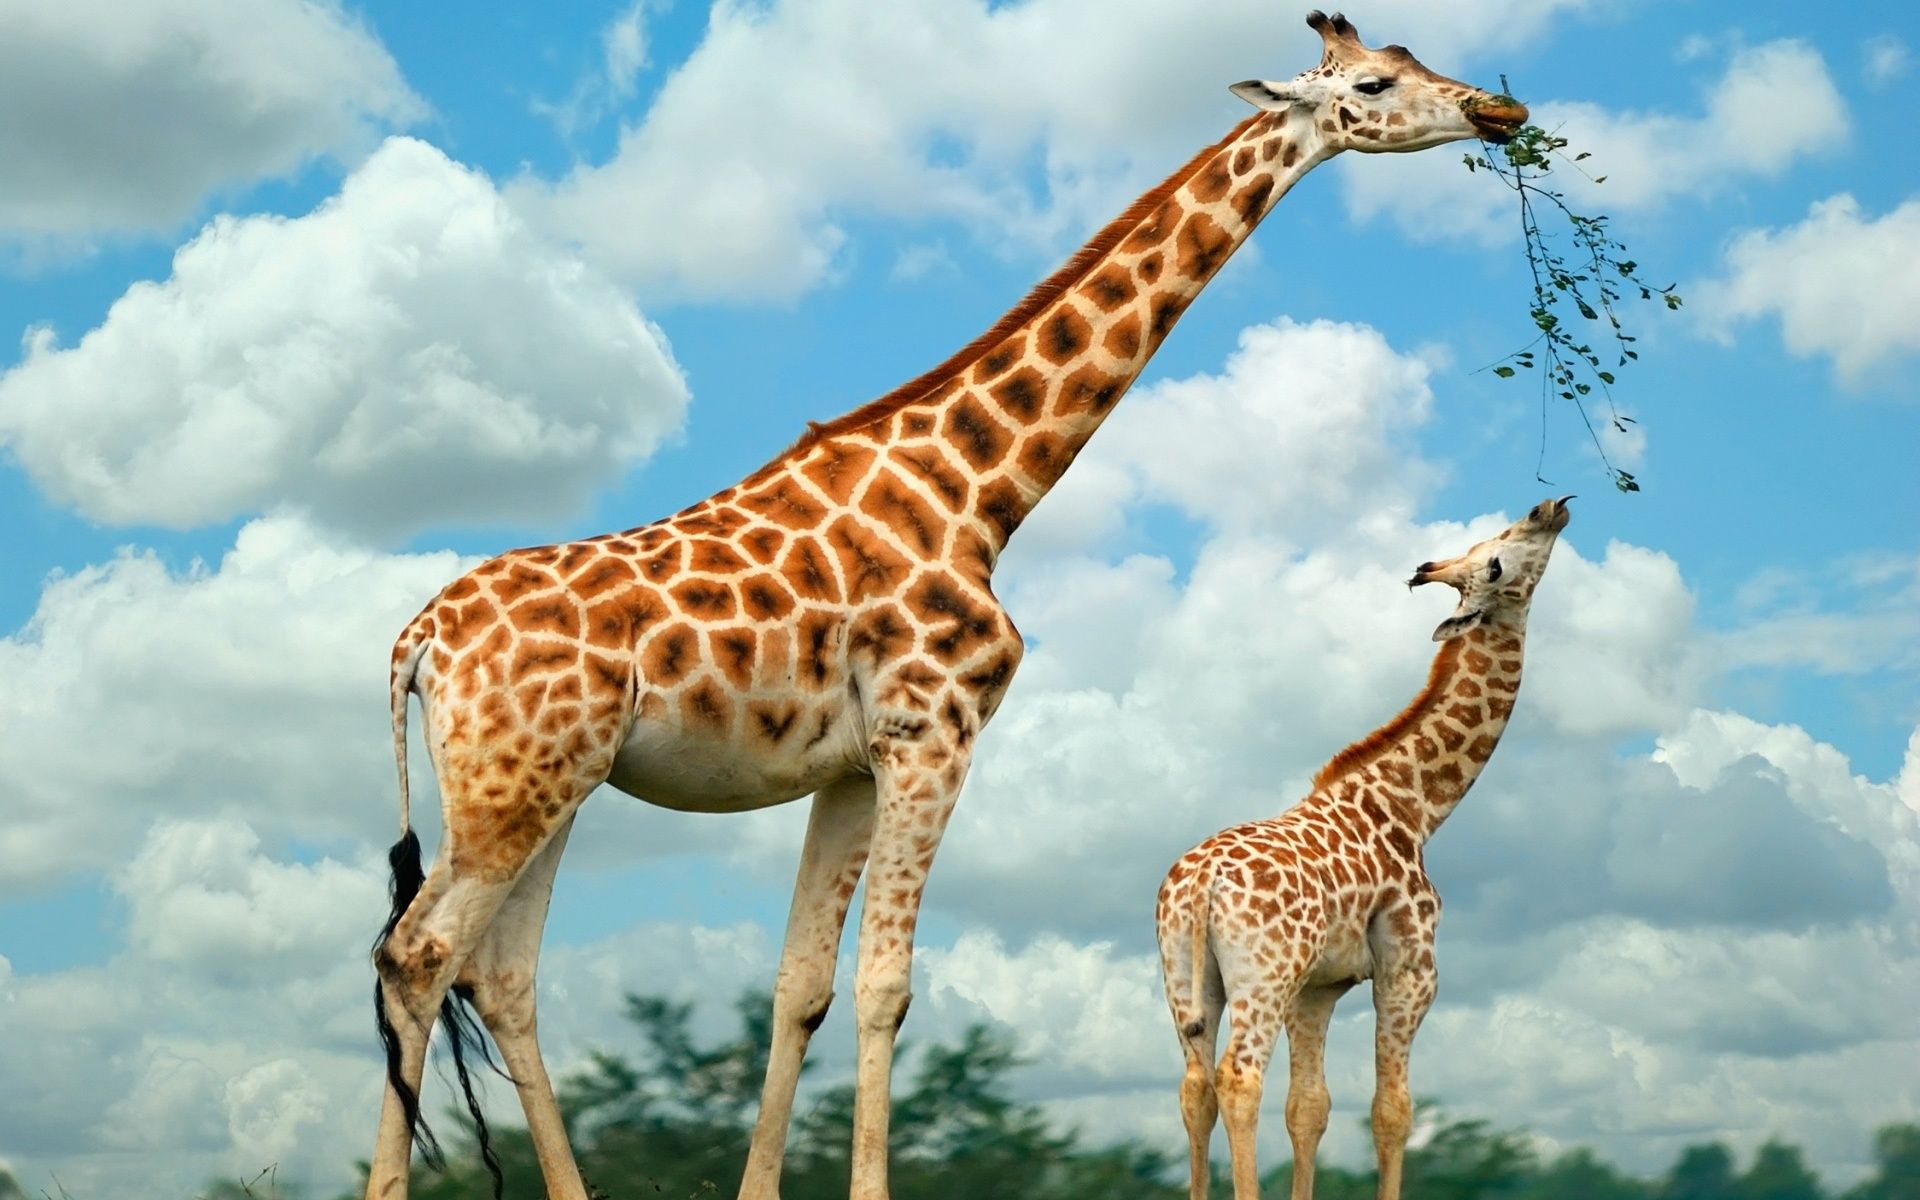 Wild giraffe photo